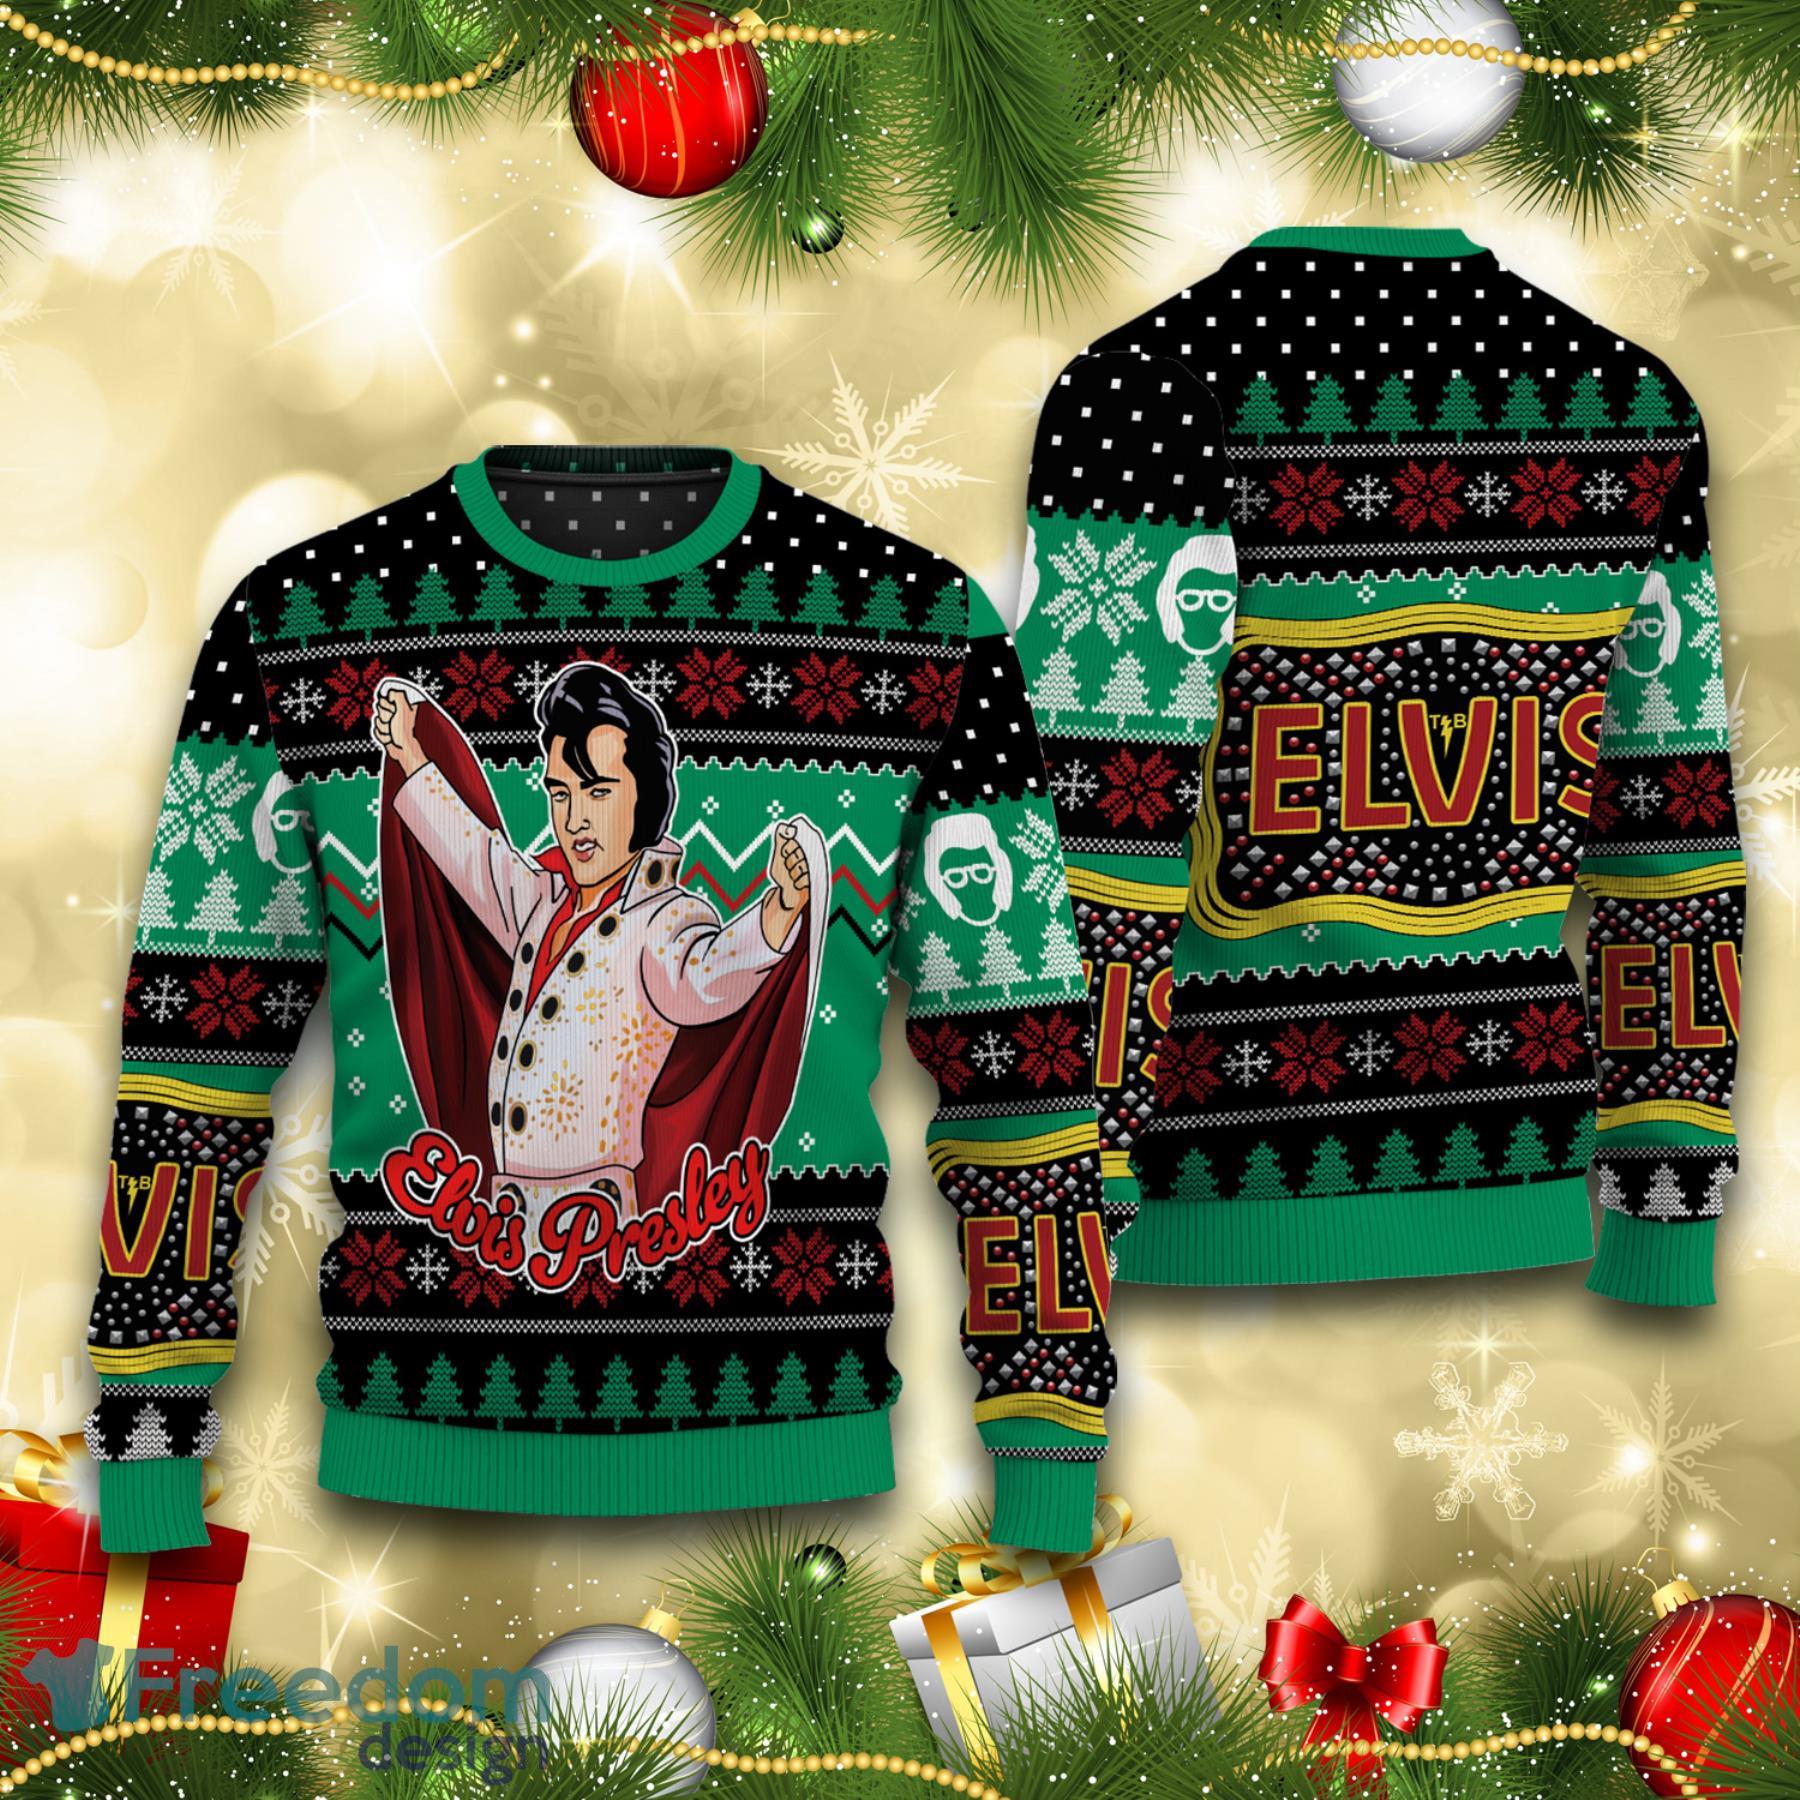 Funny Elviss Presleyy Belt Buckle Sign With Rhinestone Christmas Sweater Product Photo 1